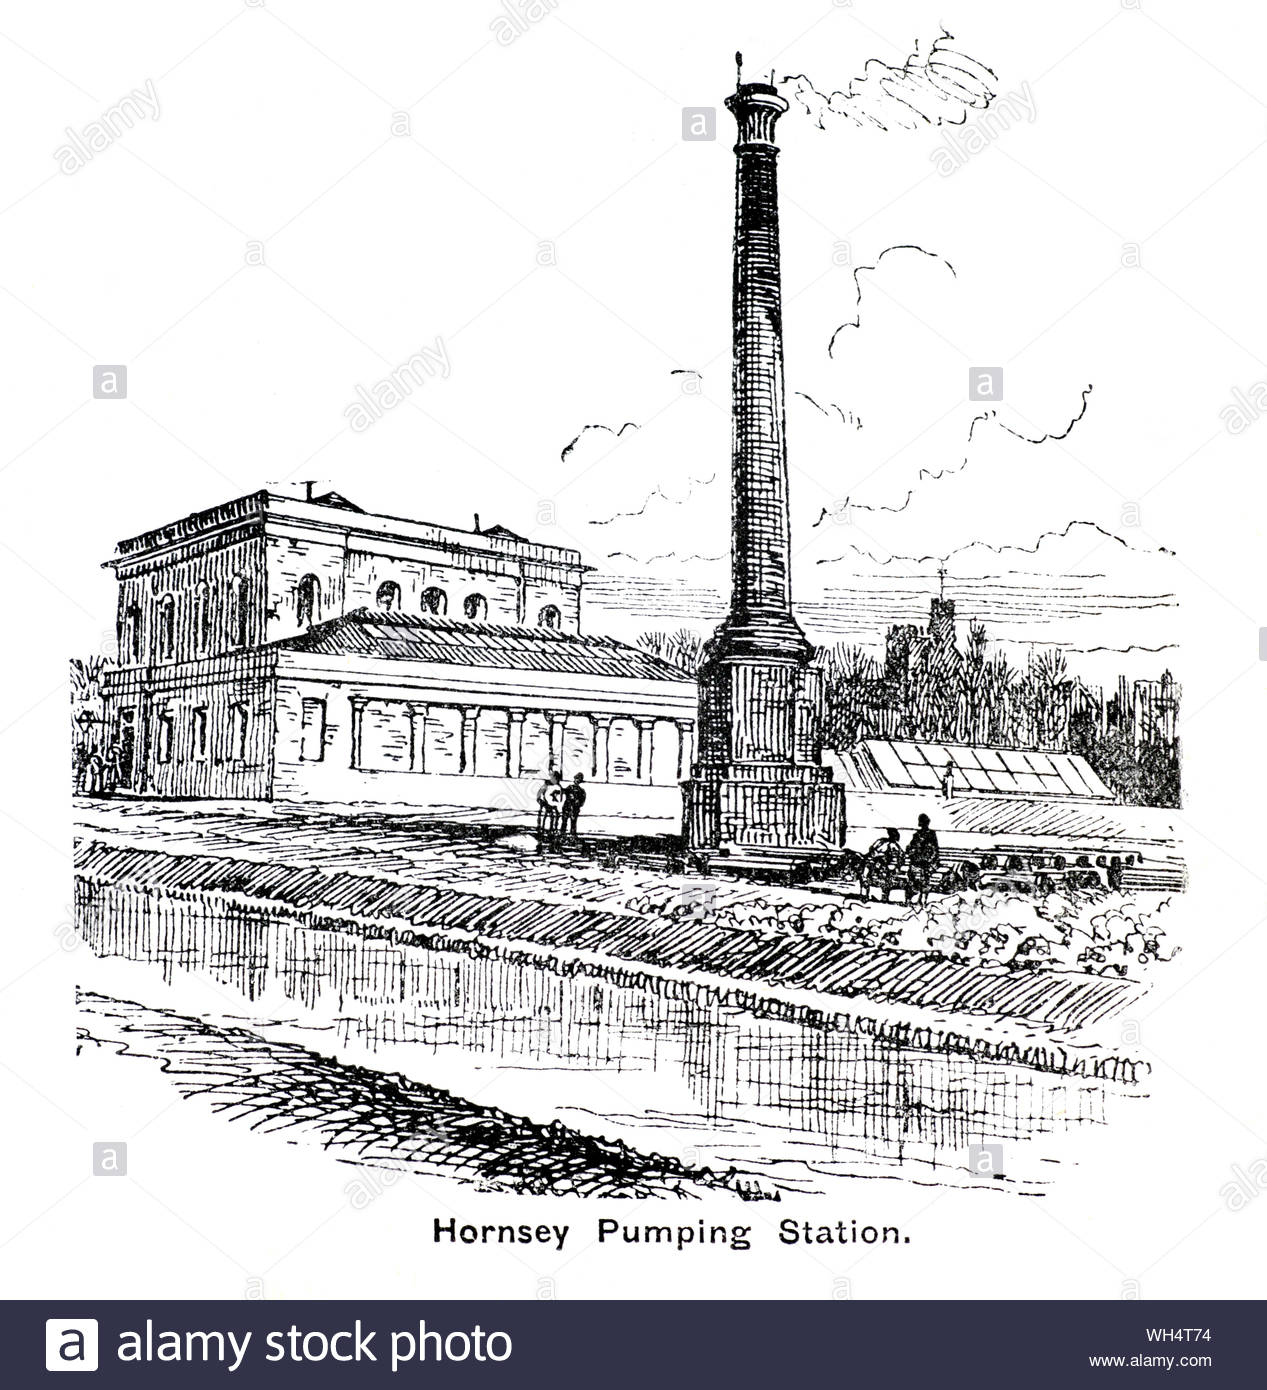 Hornsey Pumping Station, Haringey London, vintage illustration from 1884 Stock Photo